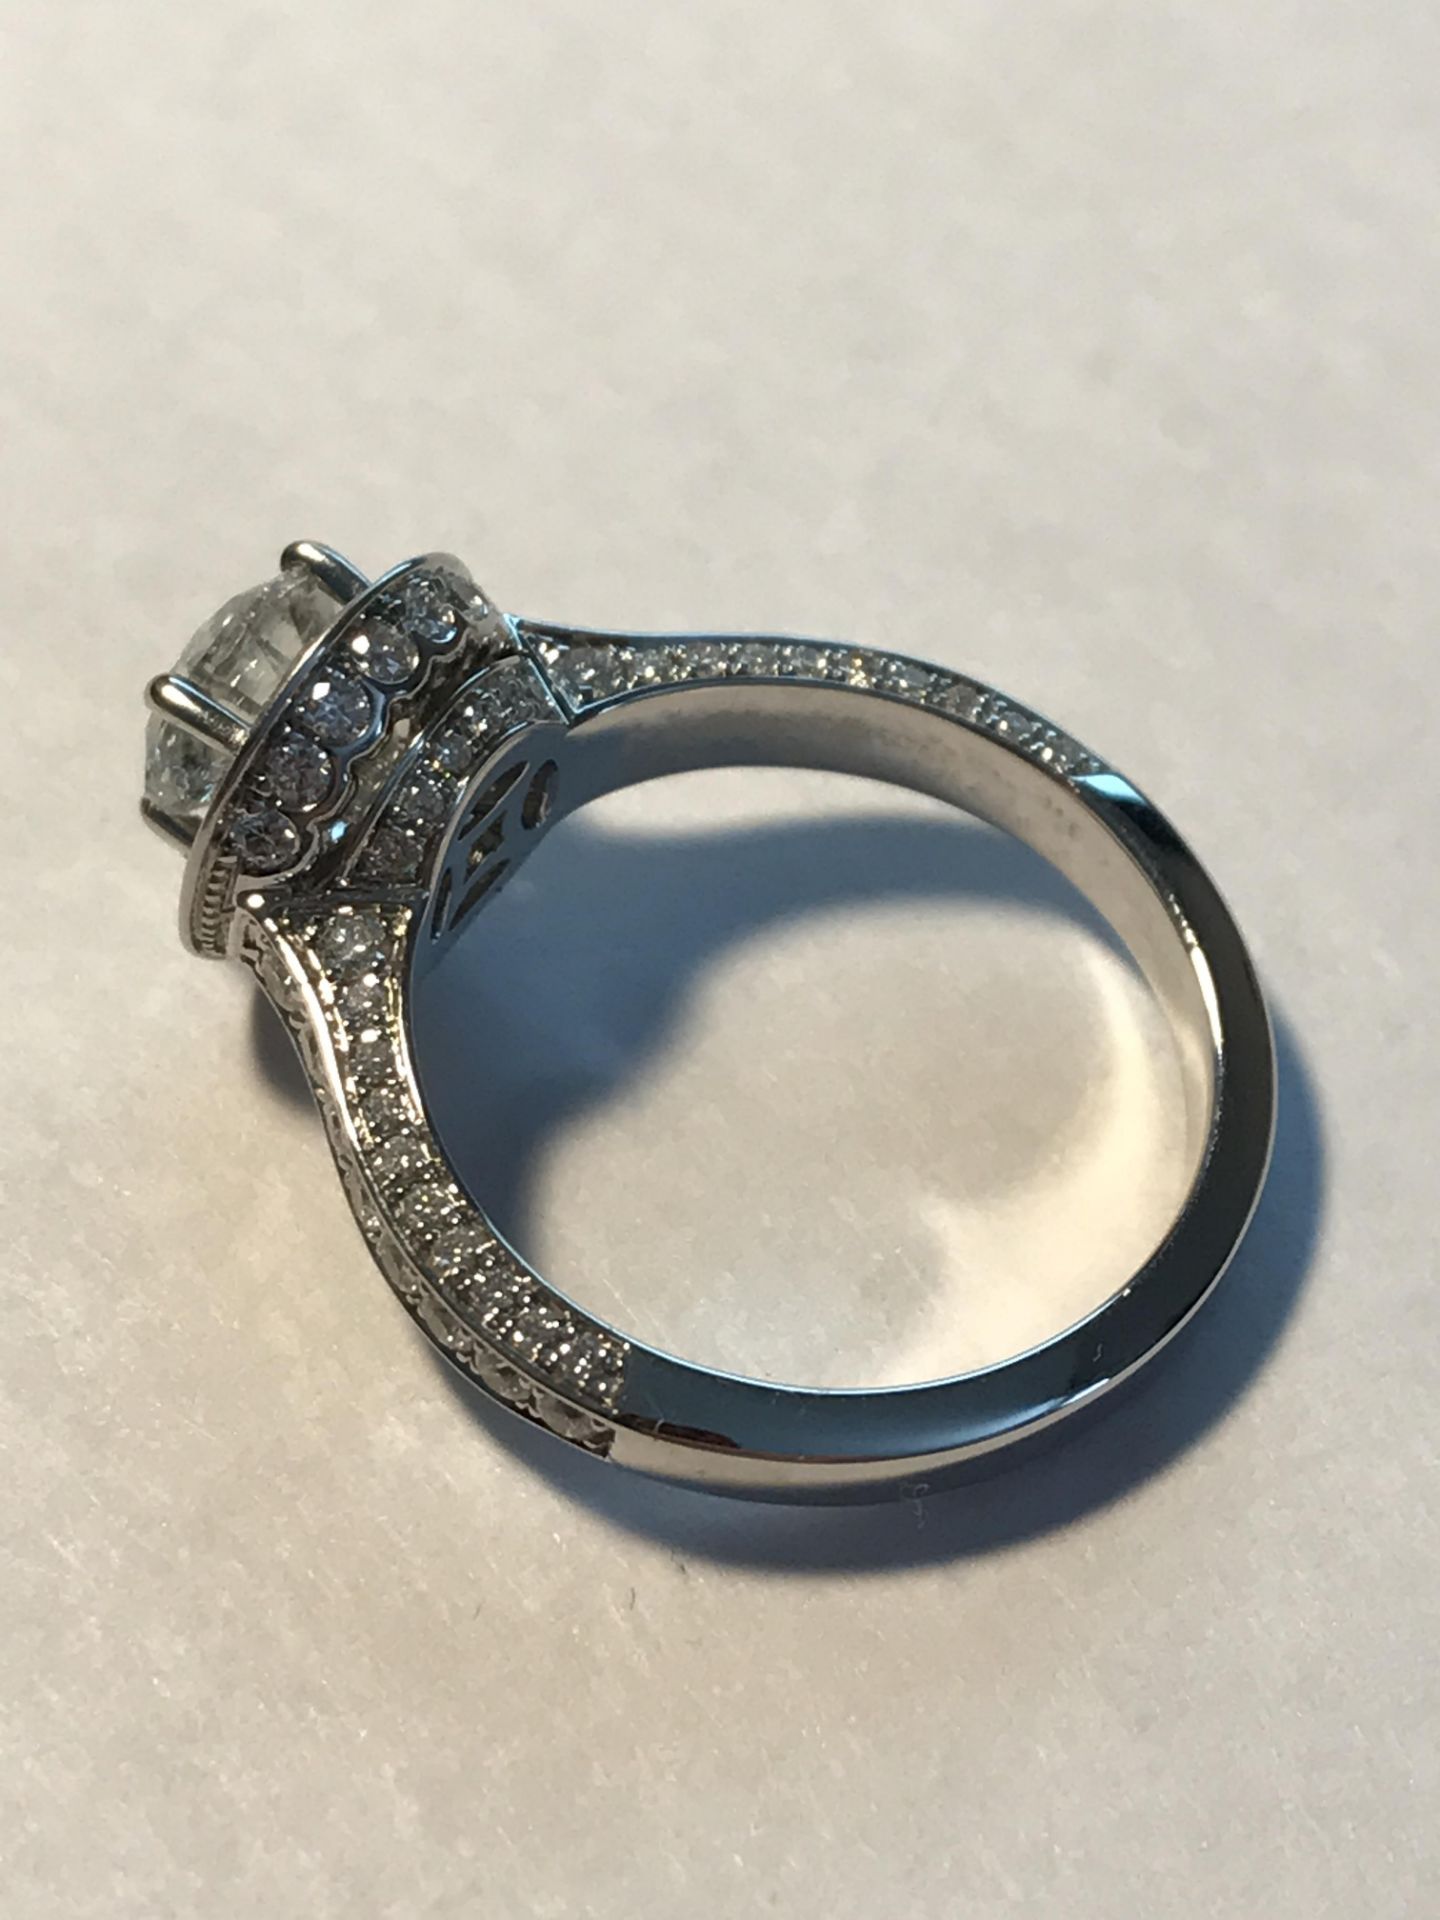 18 Carat White Gold Diamond Engagement Ring - Unworn 10/10 Condition - Image 6 of 18